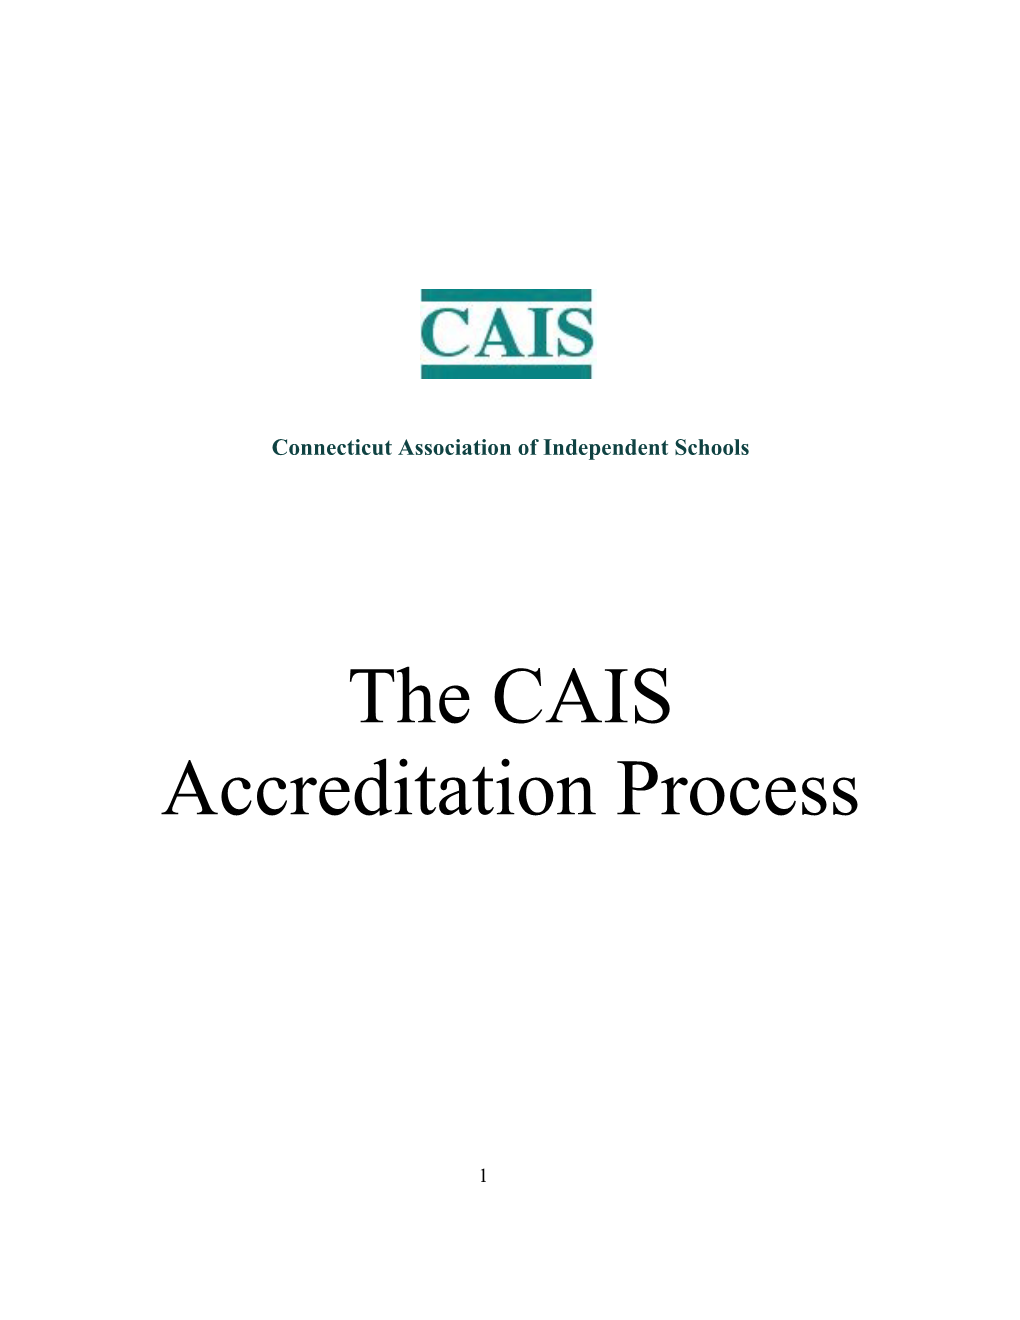 The CAIS Evaluation Process